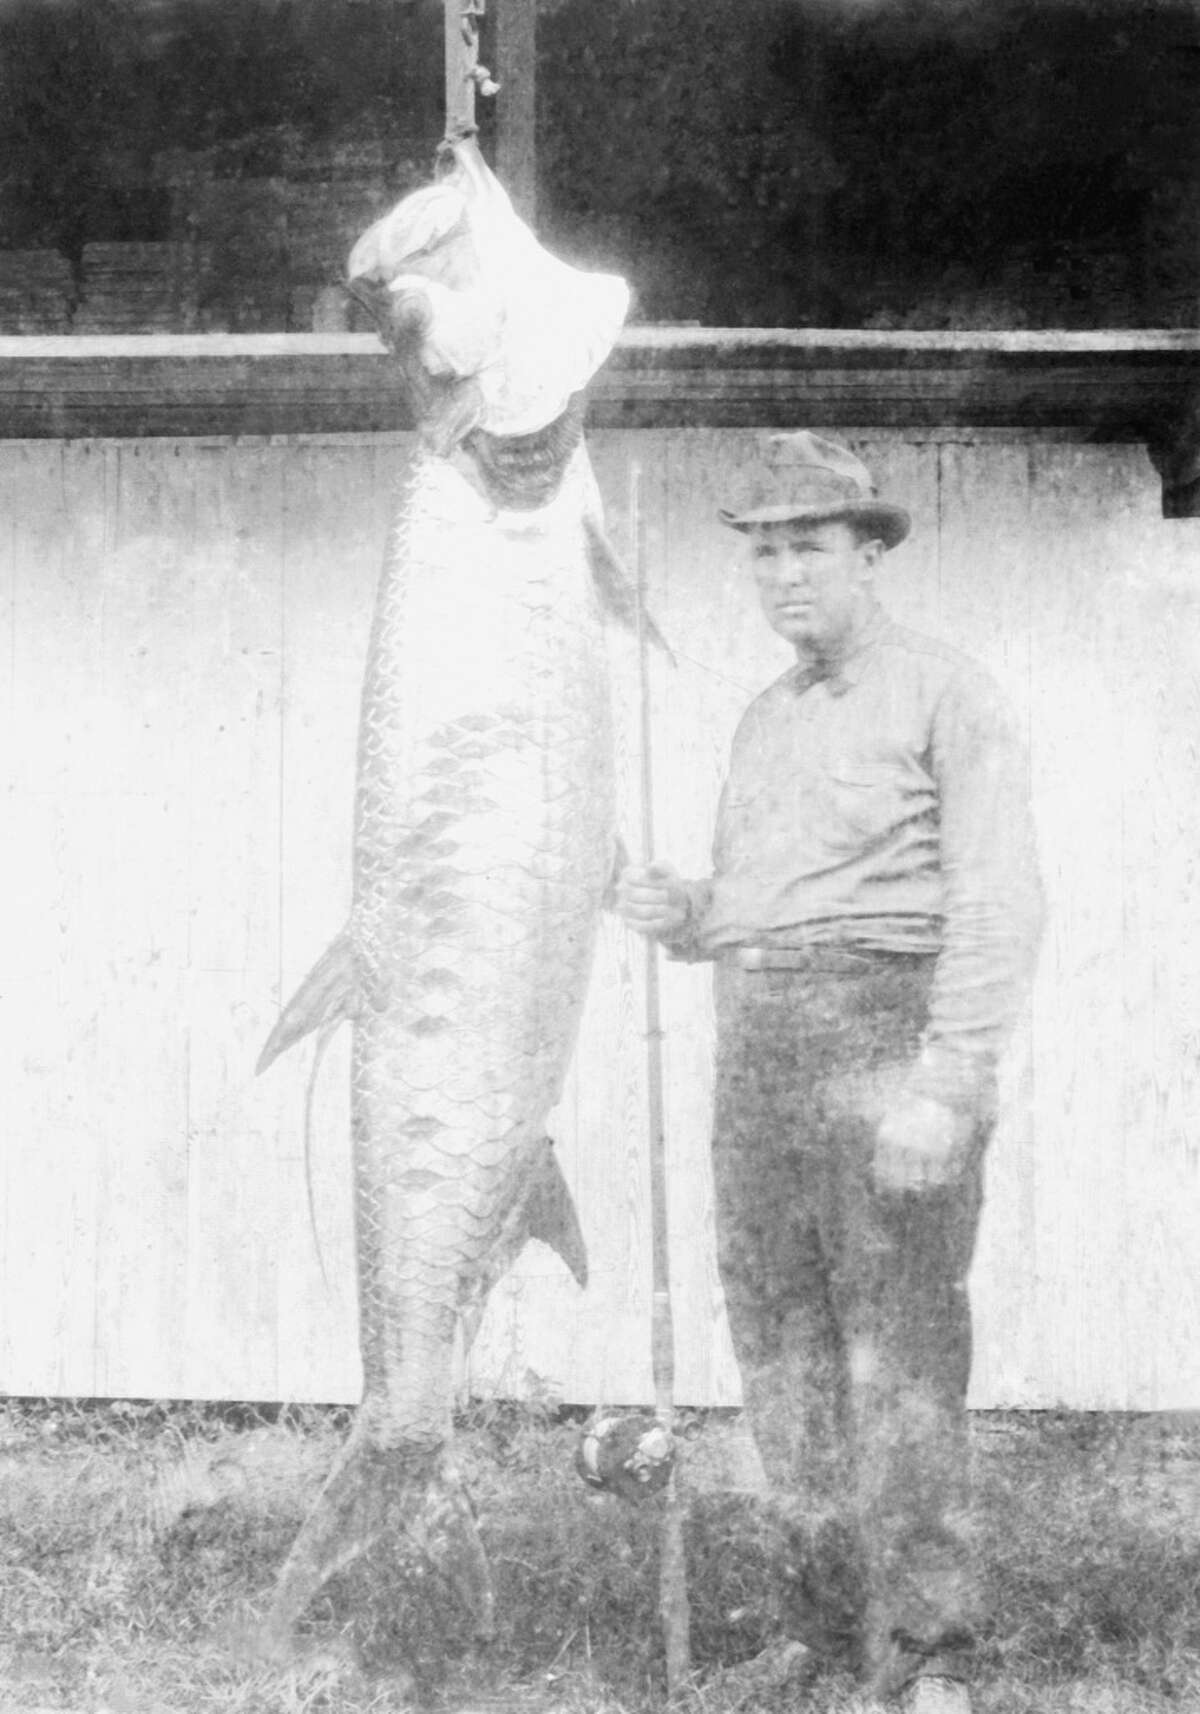 An angler stands next to his catch, a 7 foot long tarpon caught near Palacios, Texas on September 3, 1923.